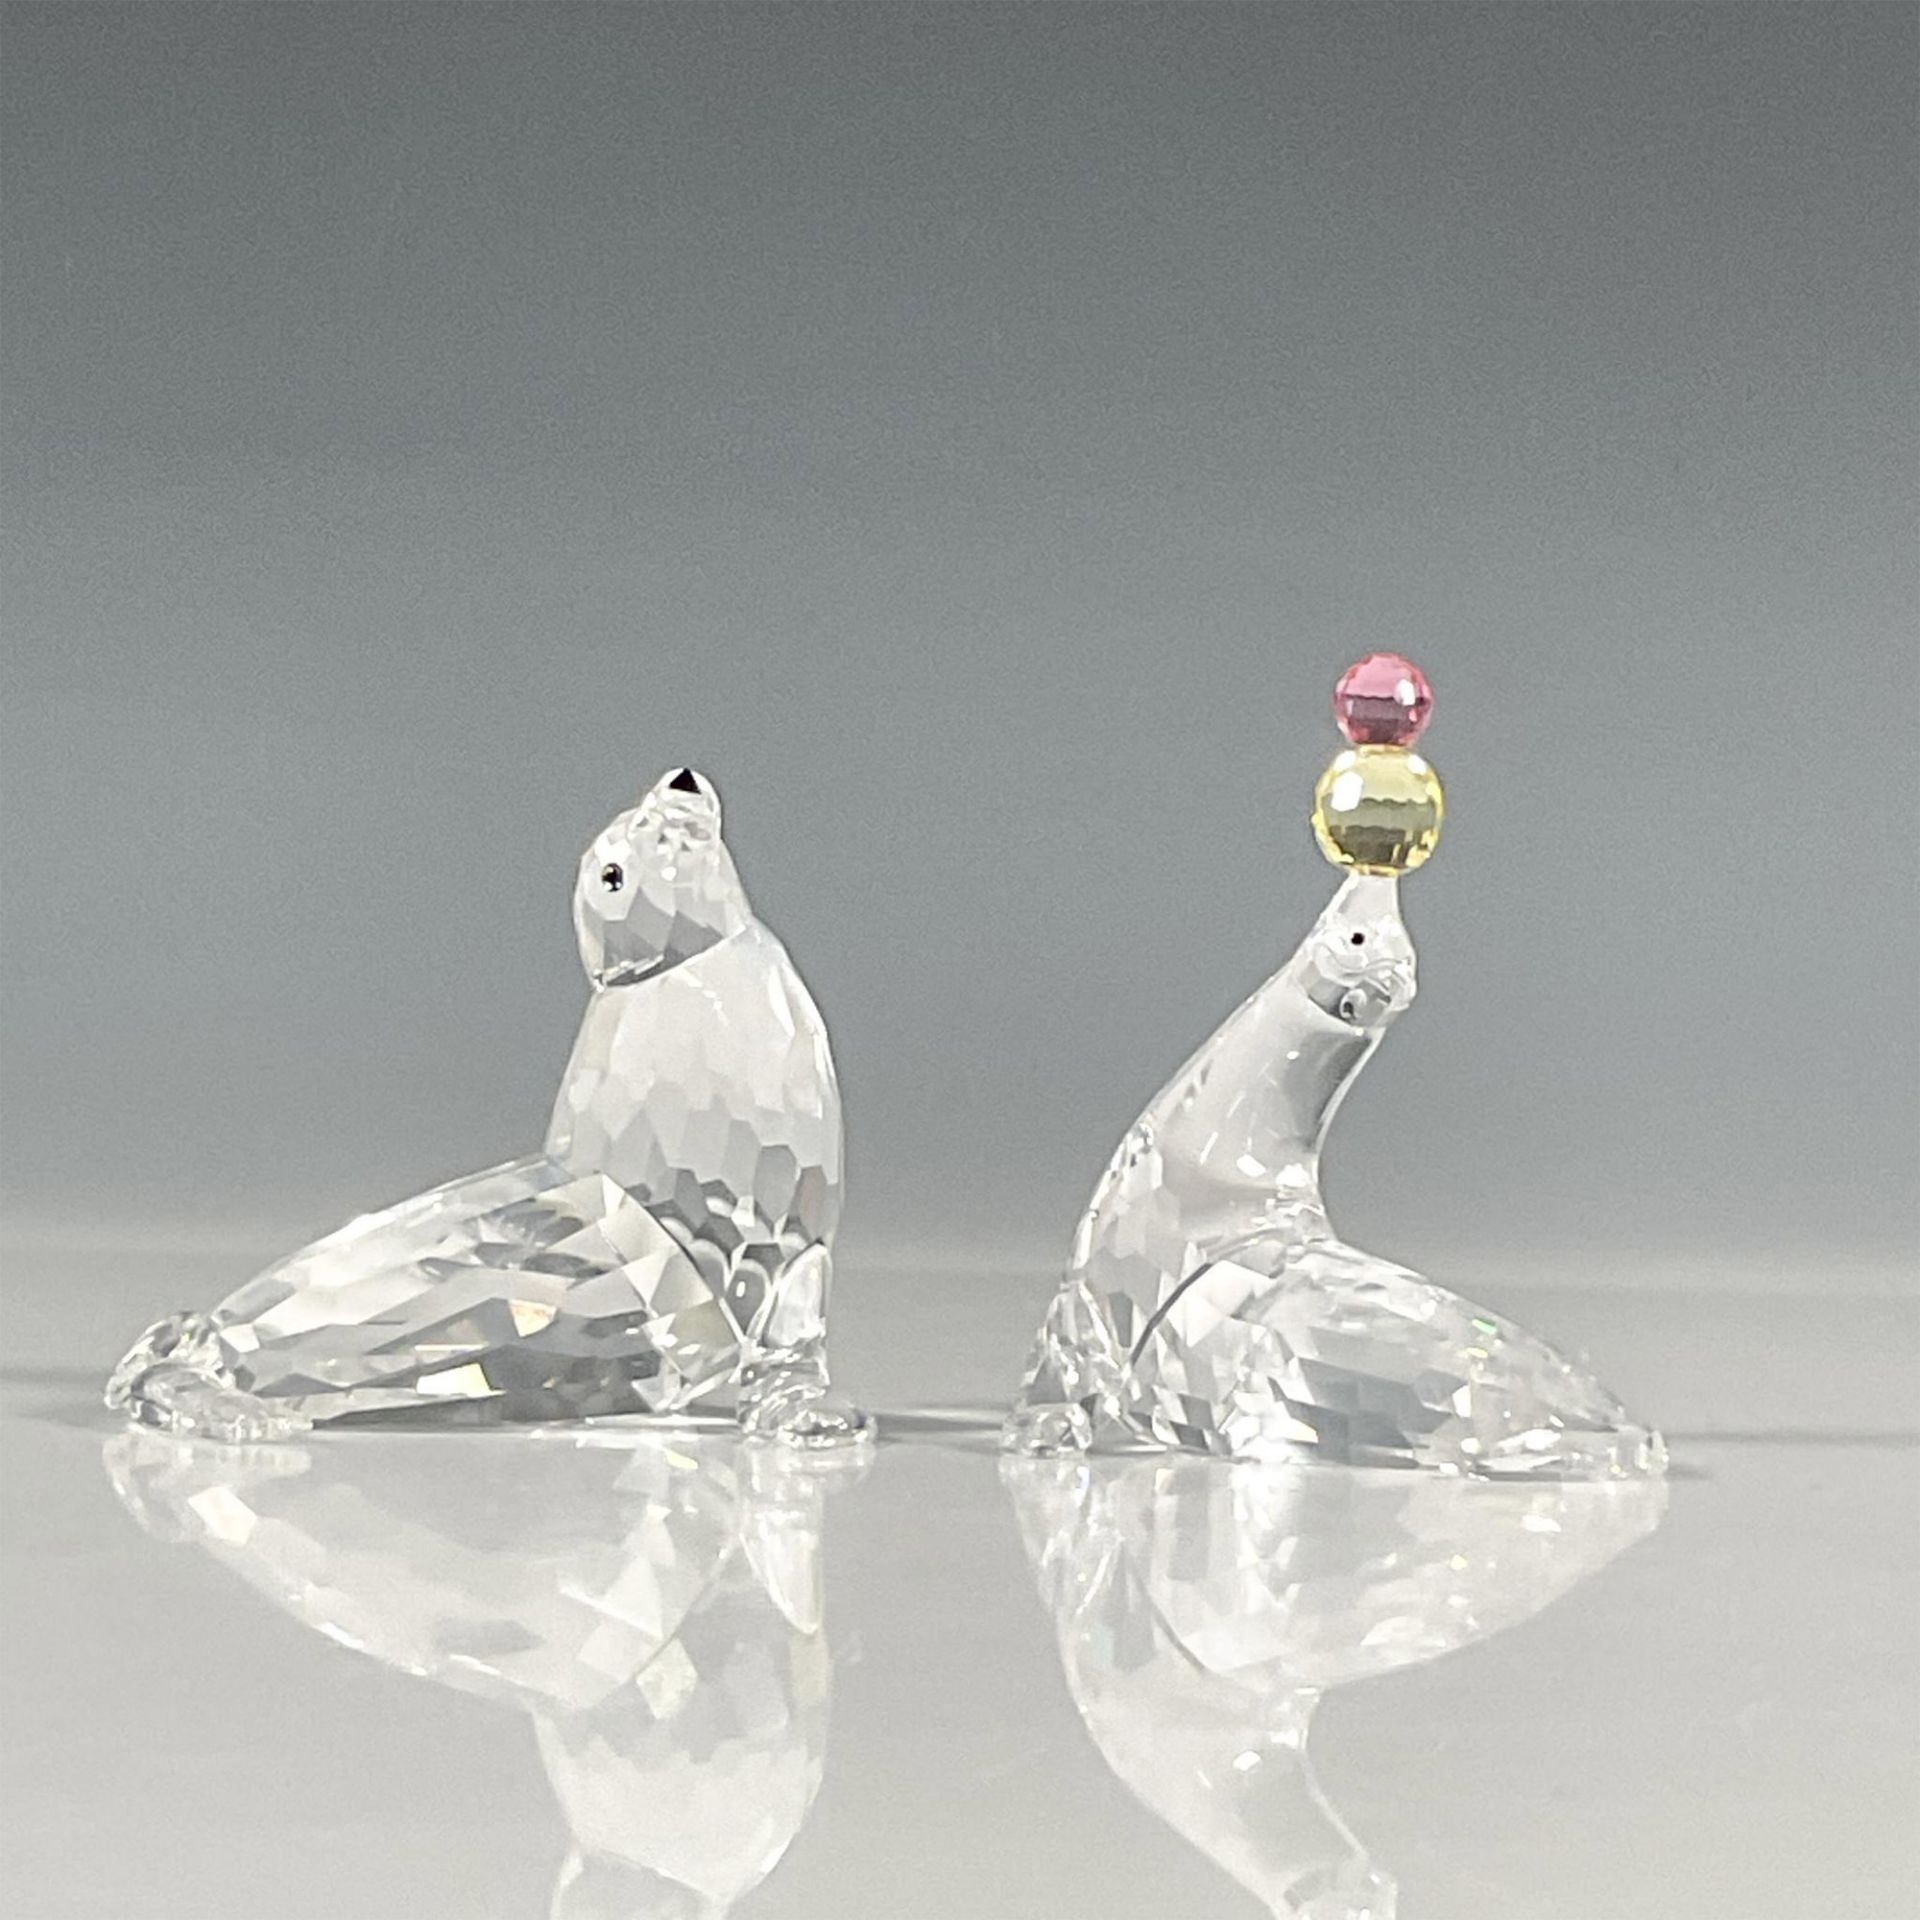 2pc Swarovski Silver Crystal Figurines, Seal and Sealion